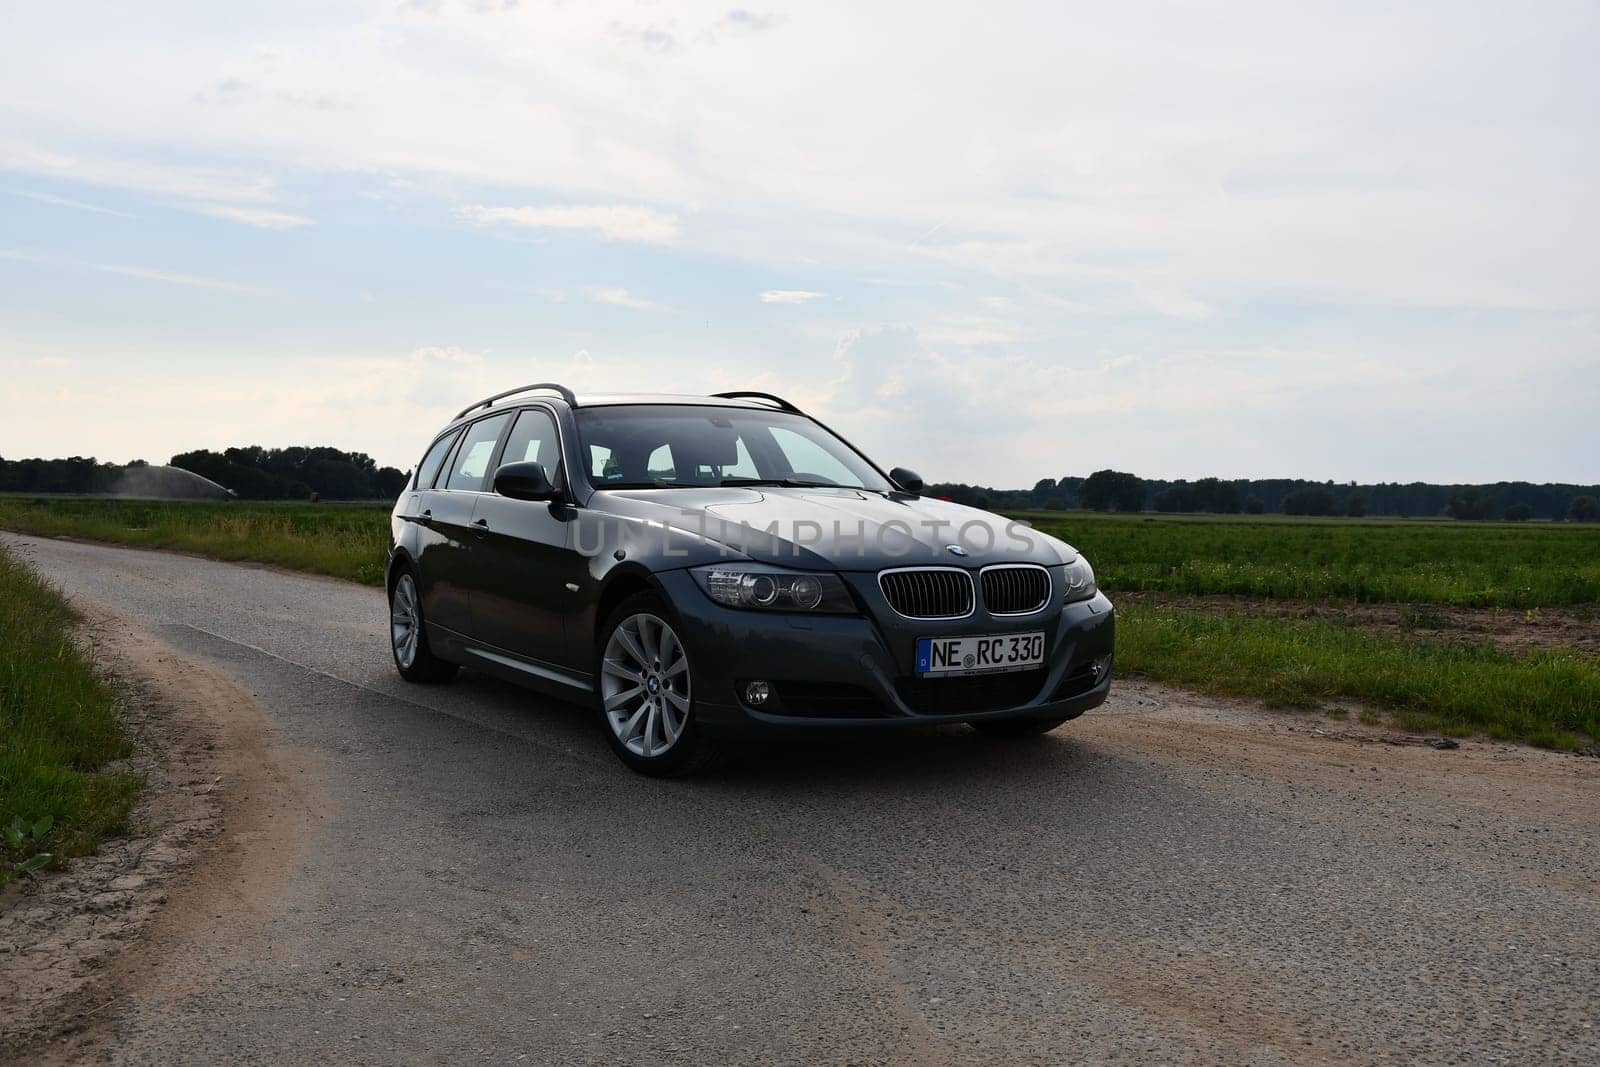 BMW 330d, E91, touring green-gray station wagon on country lane by rherrmannde